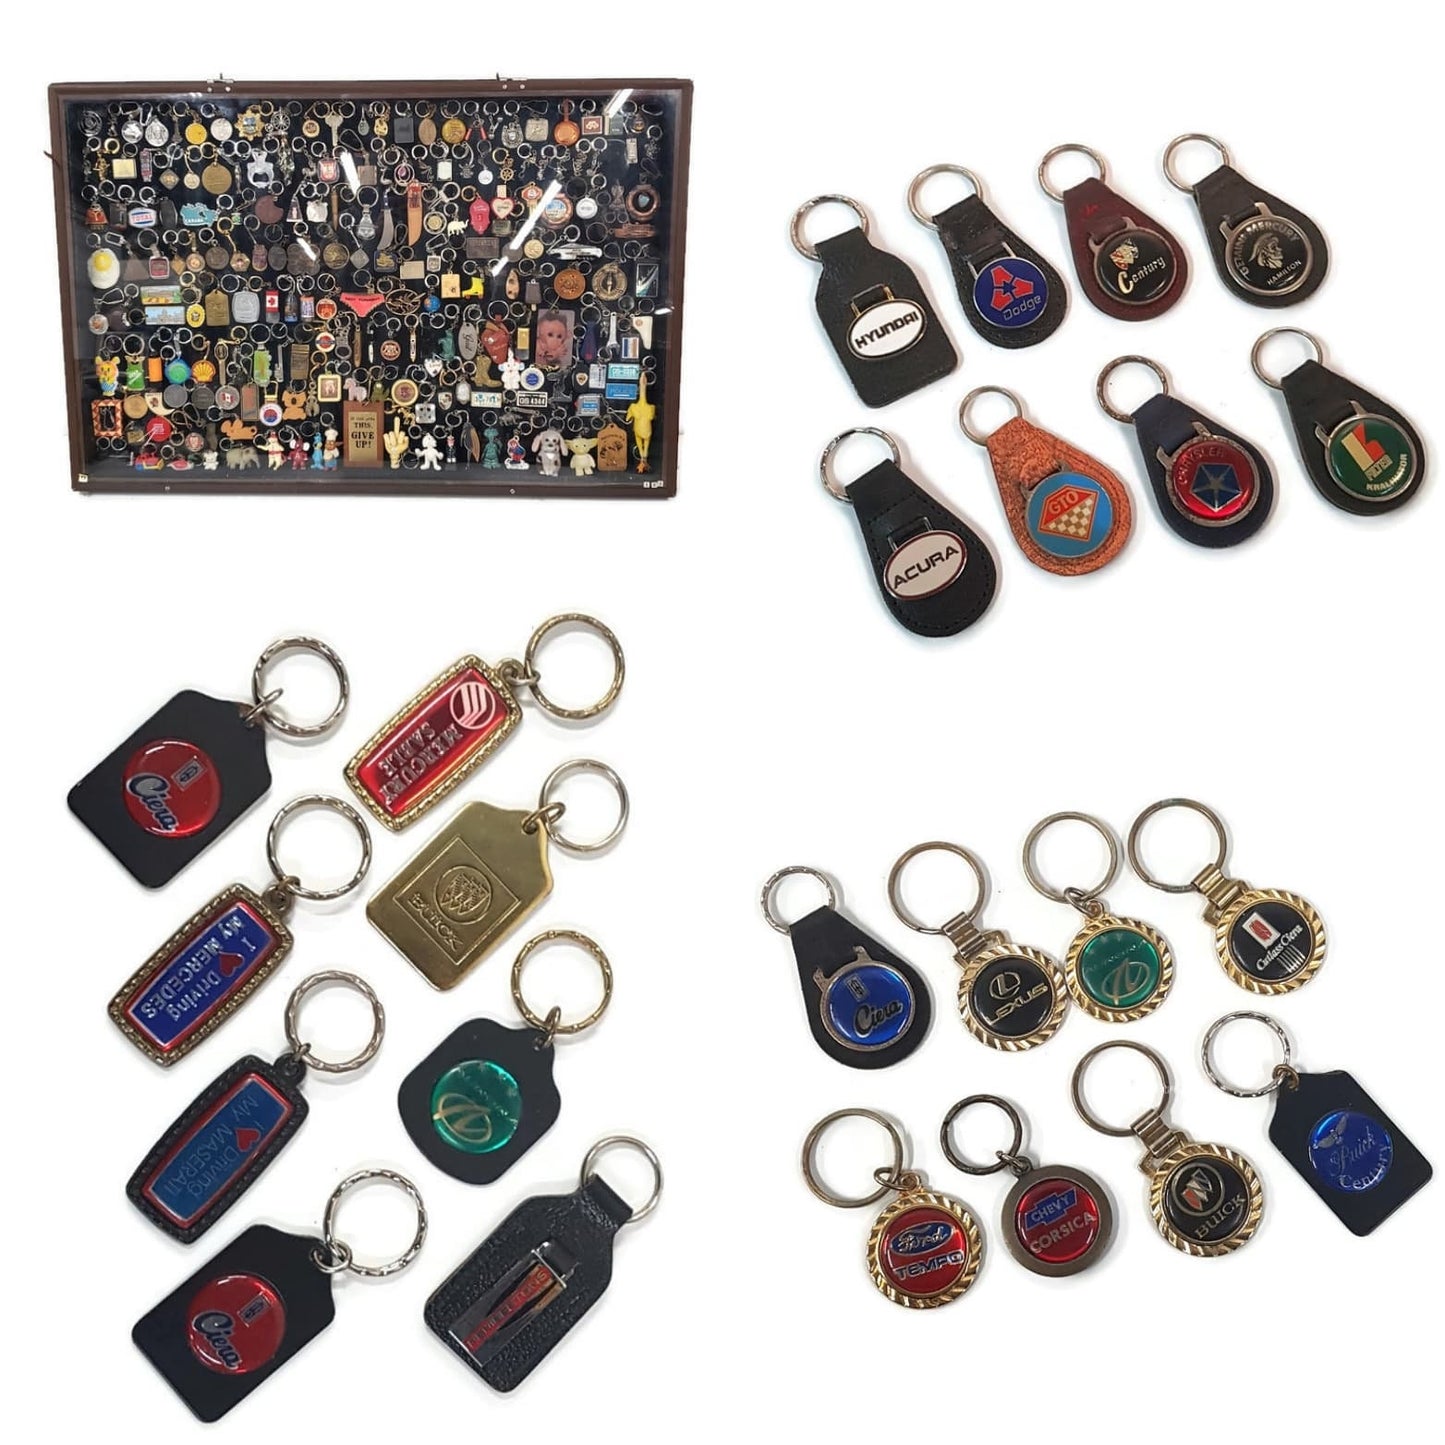 chevrolet corsica key chain keychain key fob keytag vintage automotove keychain gift collectible